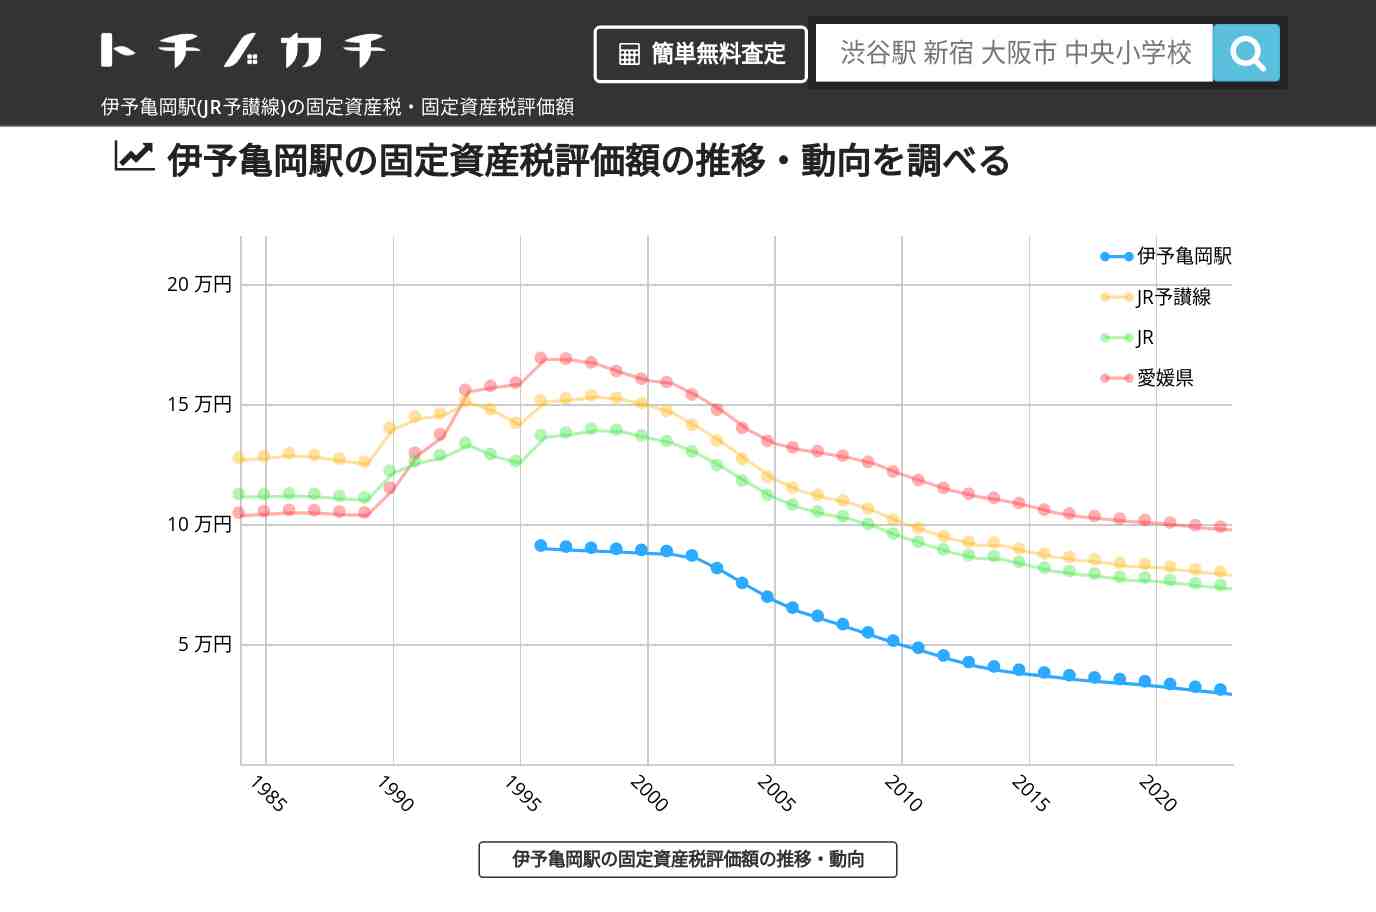 伊予亀岡駅(JR予讃線)の固定資産税・固定資産税評価額 | トチノカチ